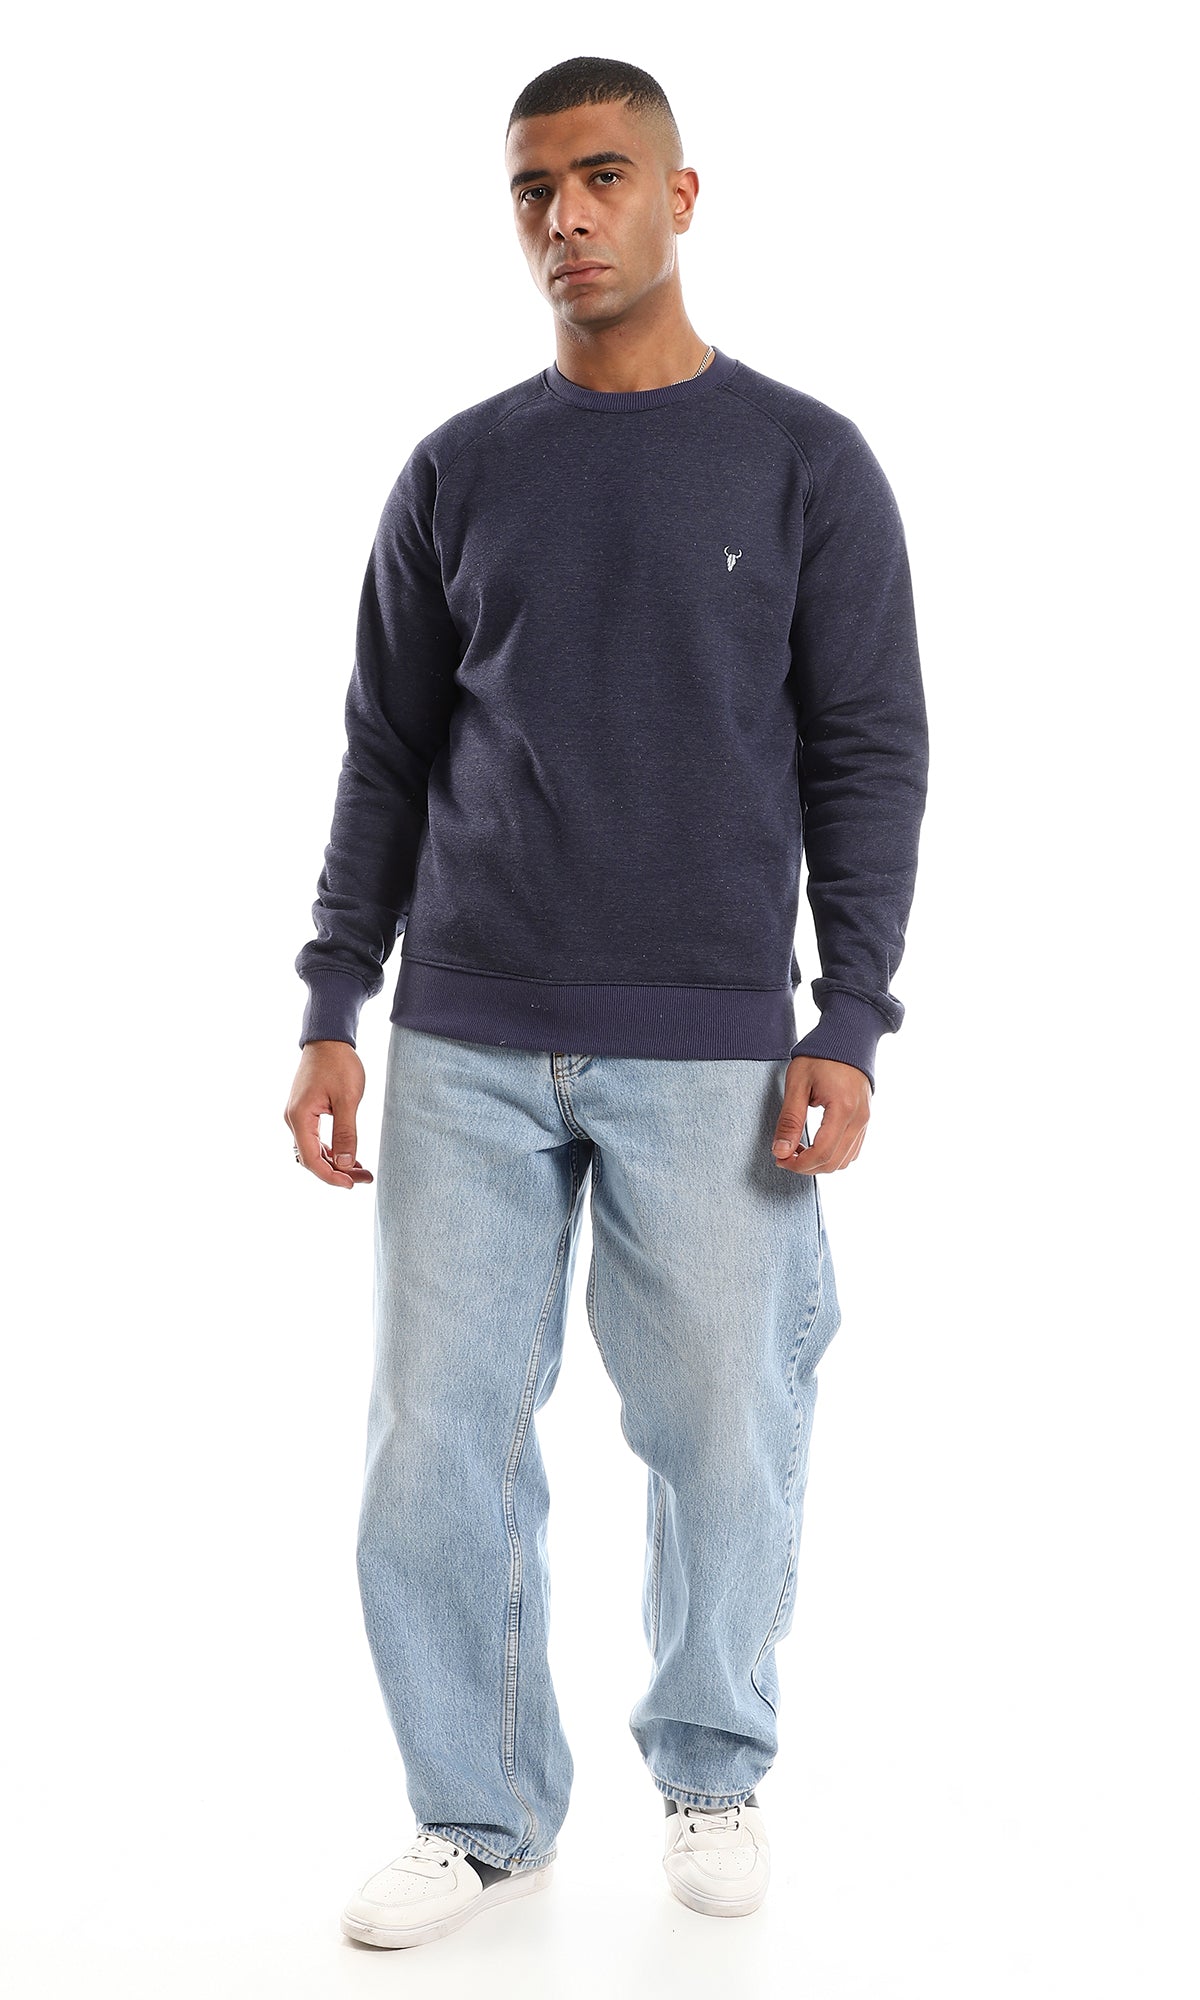 O152800 Hips Length Long Sleeves Heather Navy Blue Sweatshirt